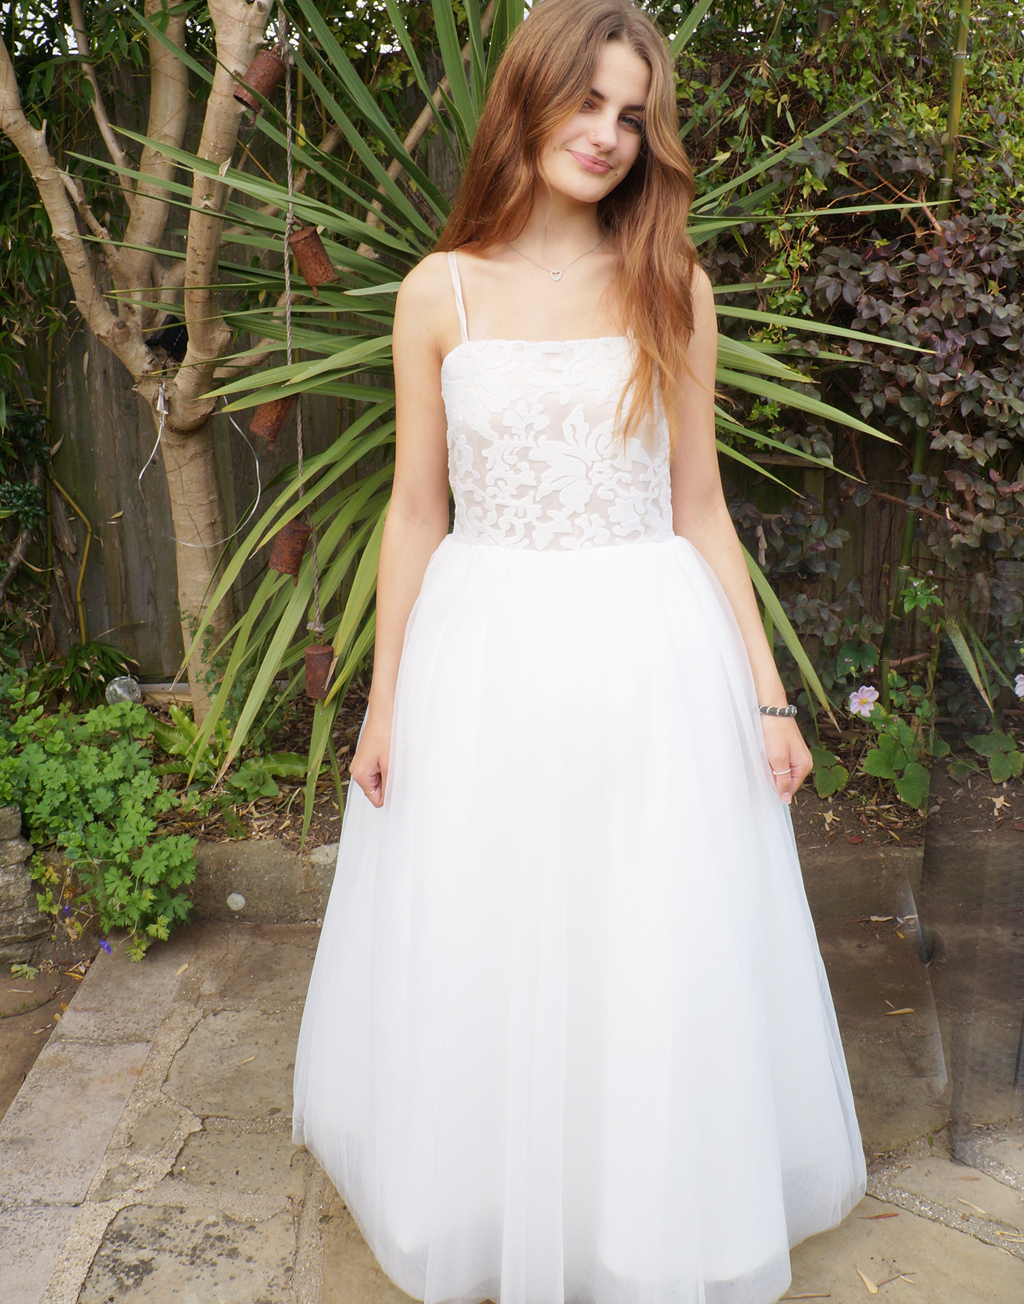 Maryanne in Ivory + Blush - Junior Bridesmaid Dress (Twin Range)